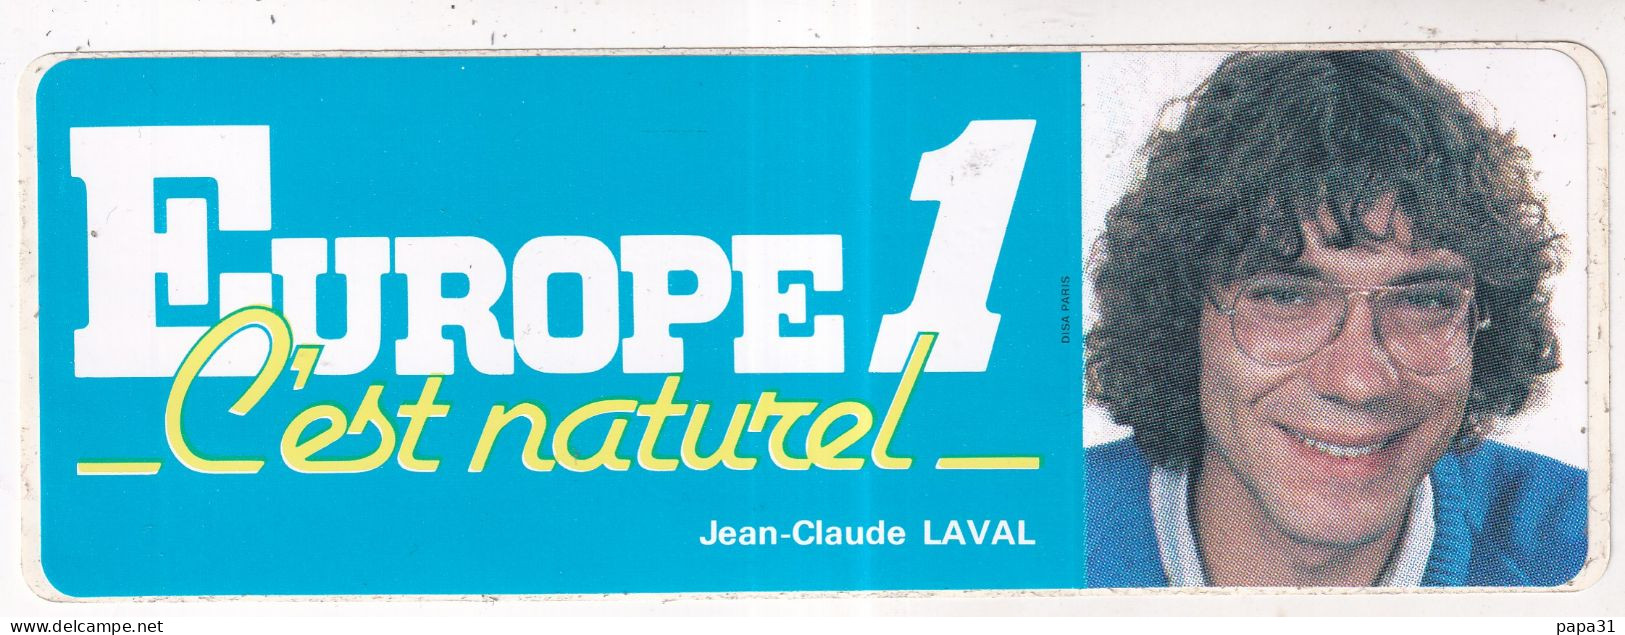 Autocollan -  EUROPE 1 C'est Naturel - Jean-Claude LAVAL - Autocollants